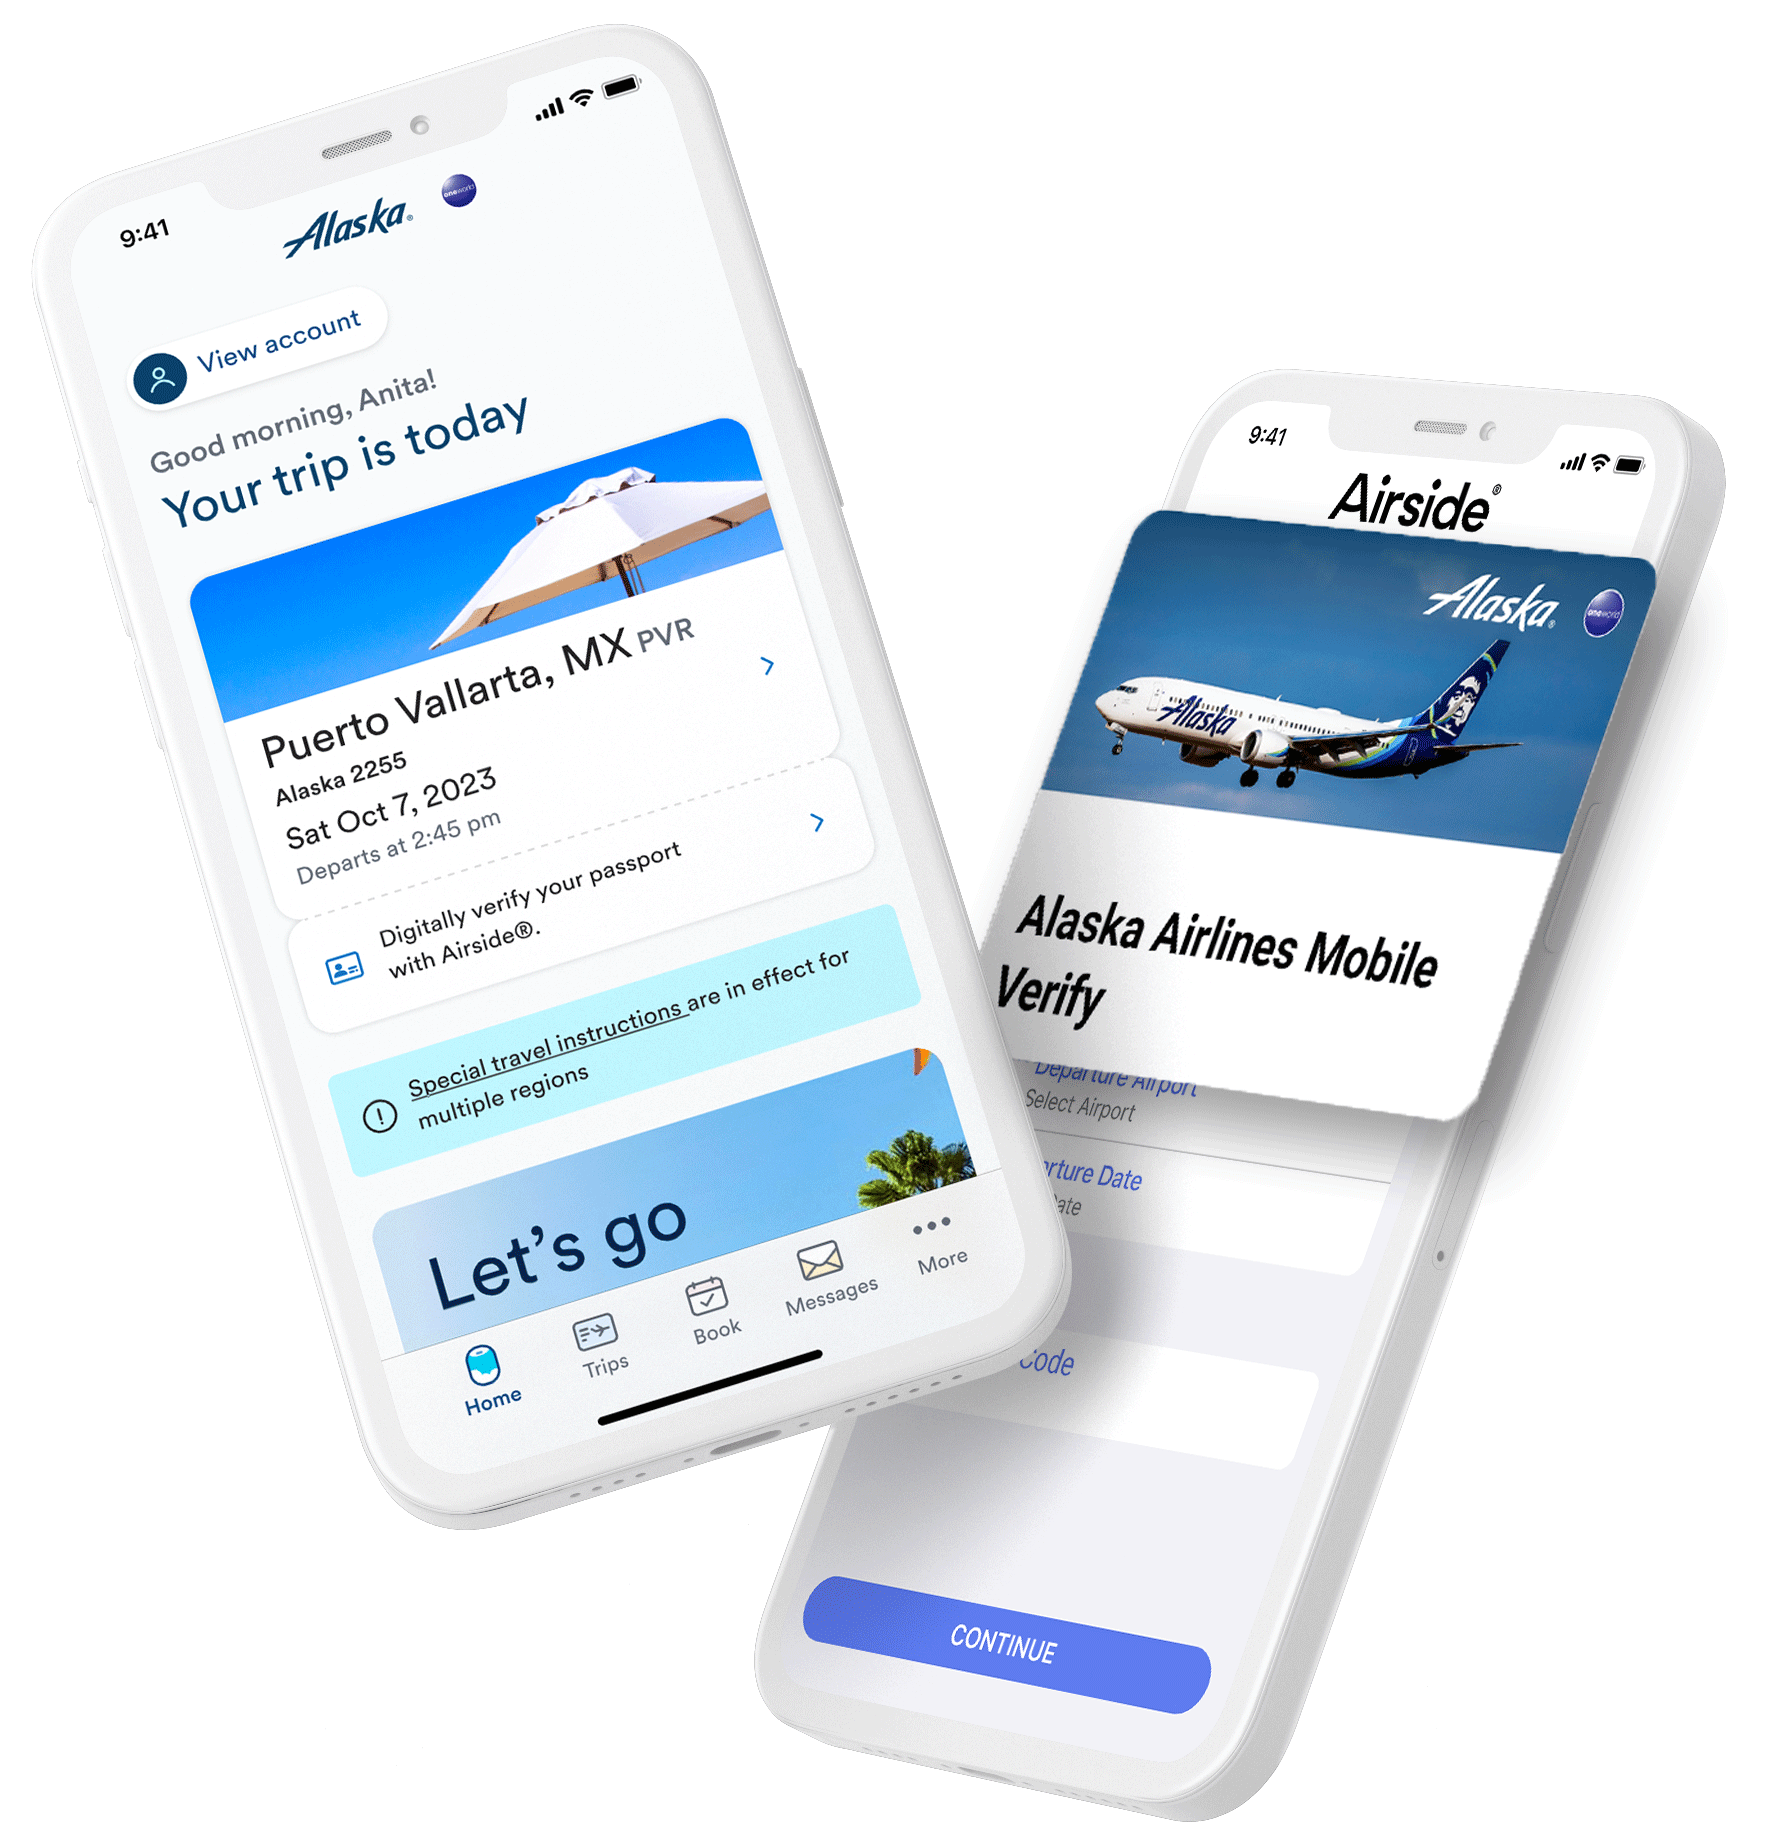 Alaska Airlines Mobile Verify on Airside digital identity app